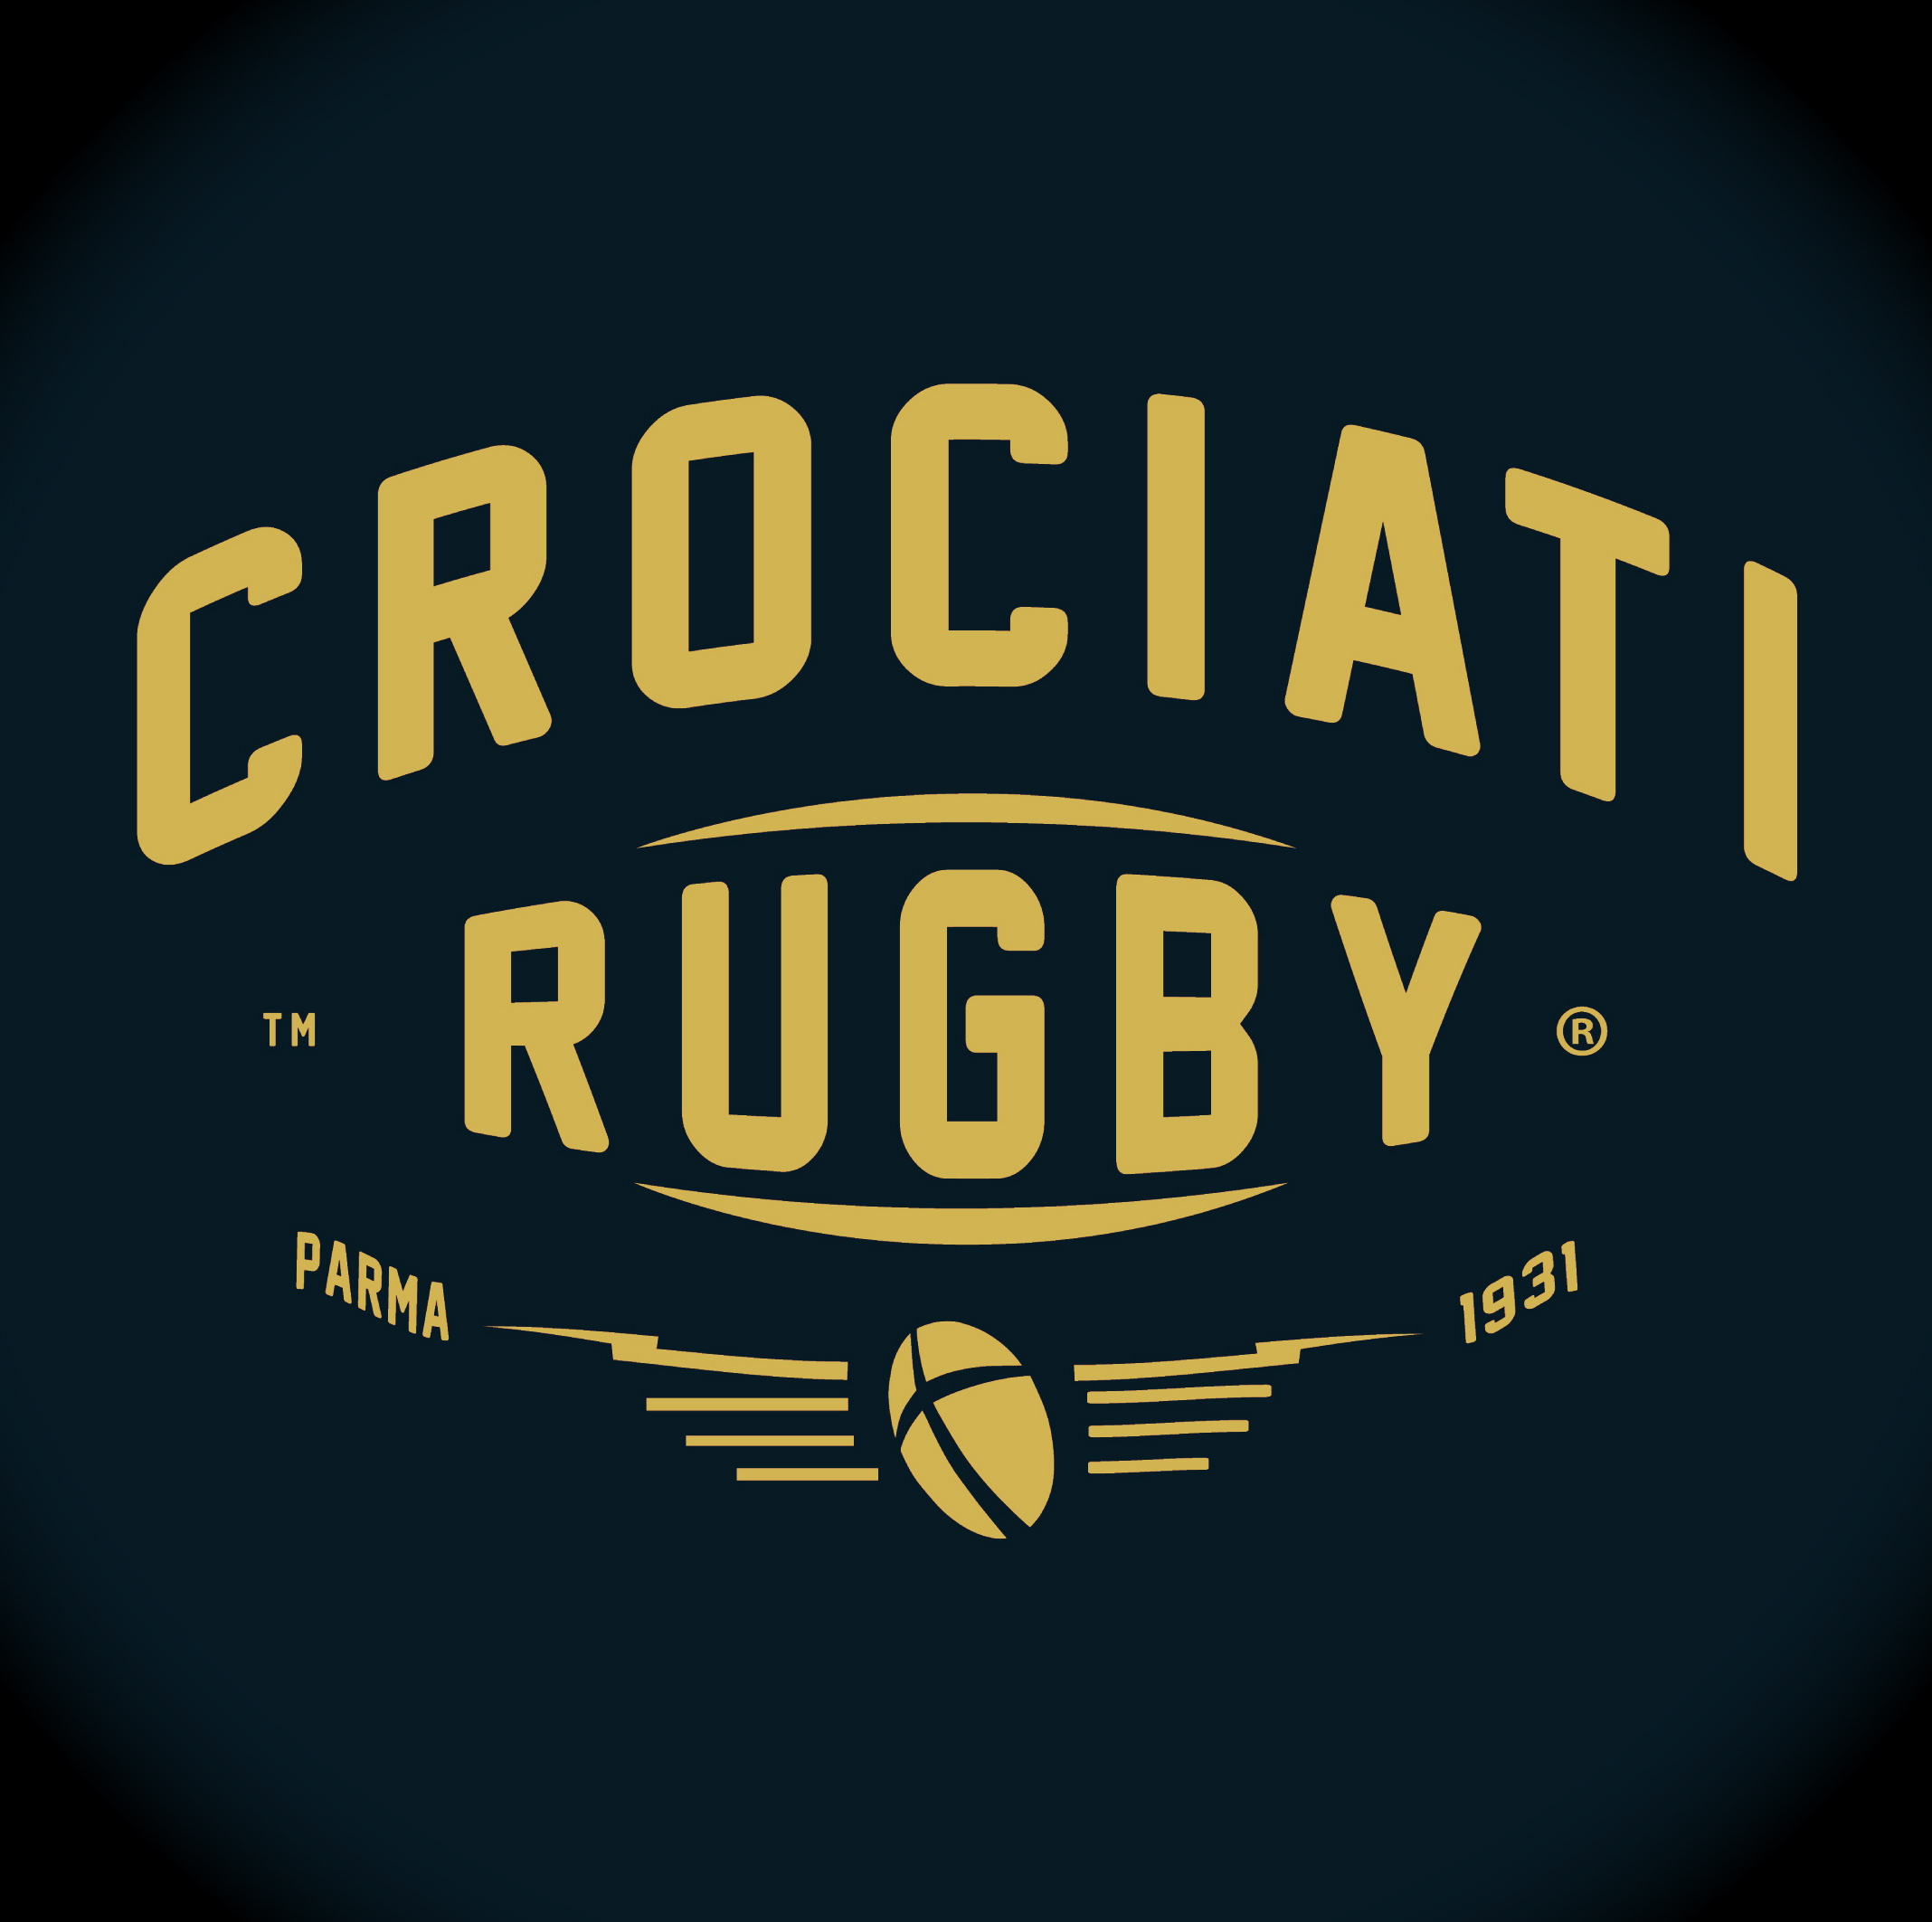 Crociati Rugby 12.13 Logo 743493911